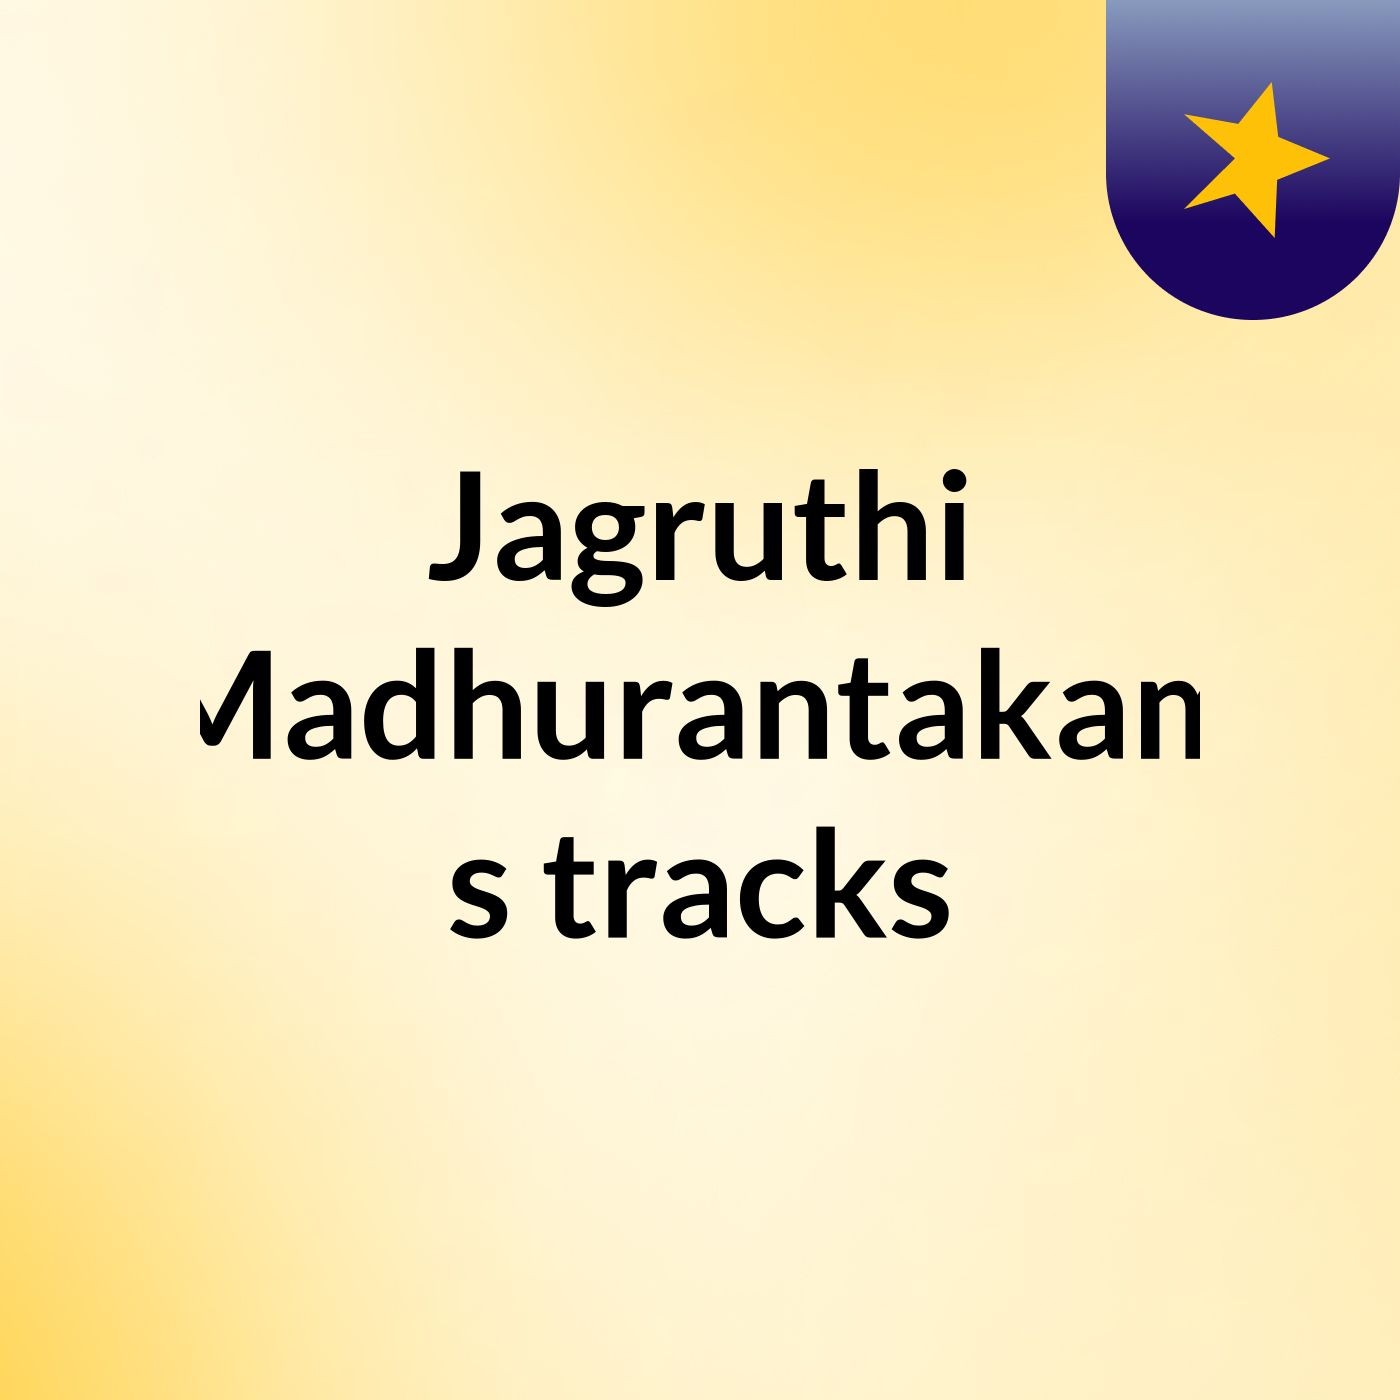 Jagruthi Madhurantakam's tracks